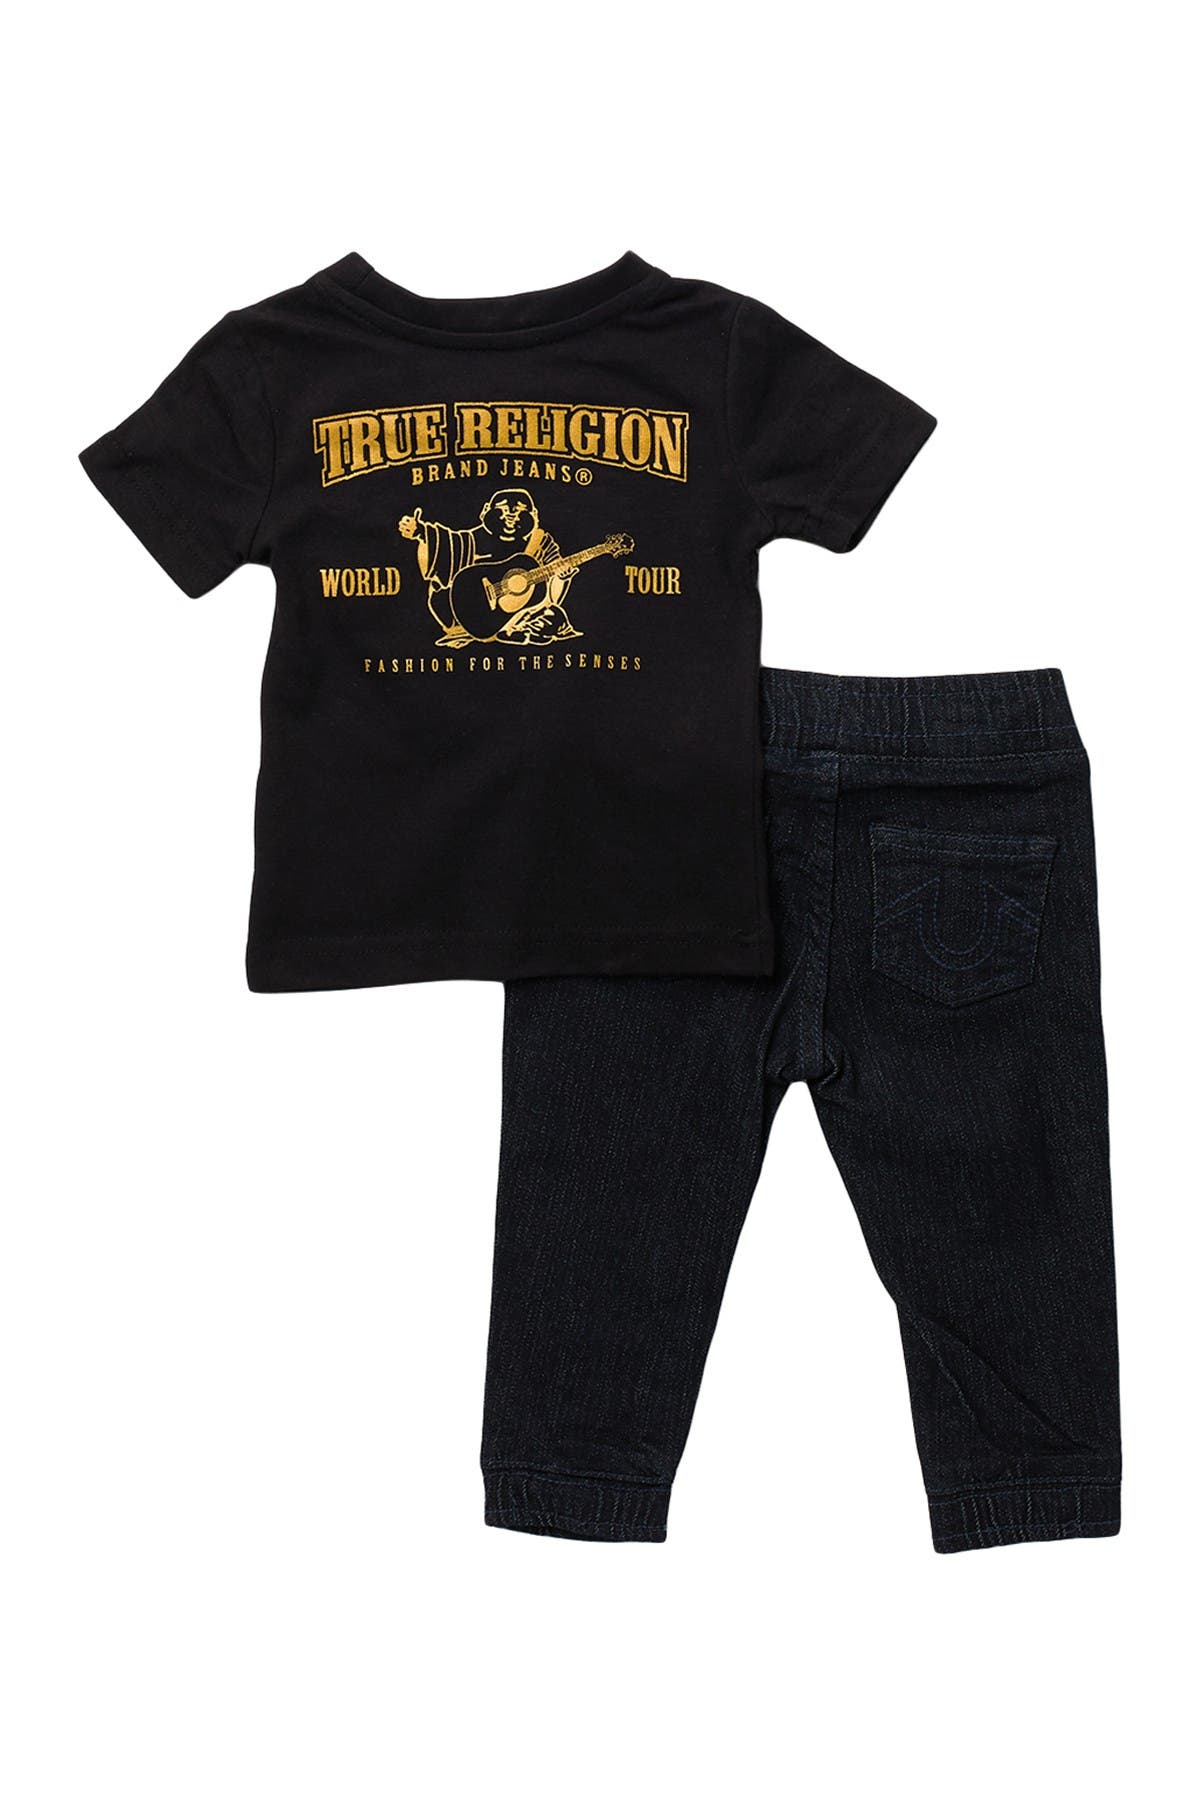 true religion t shirt kids